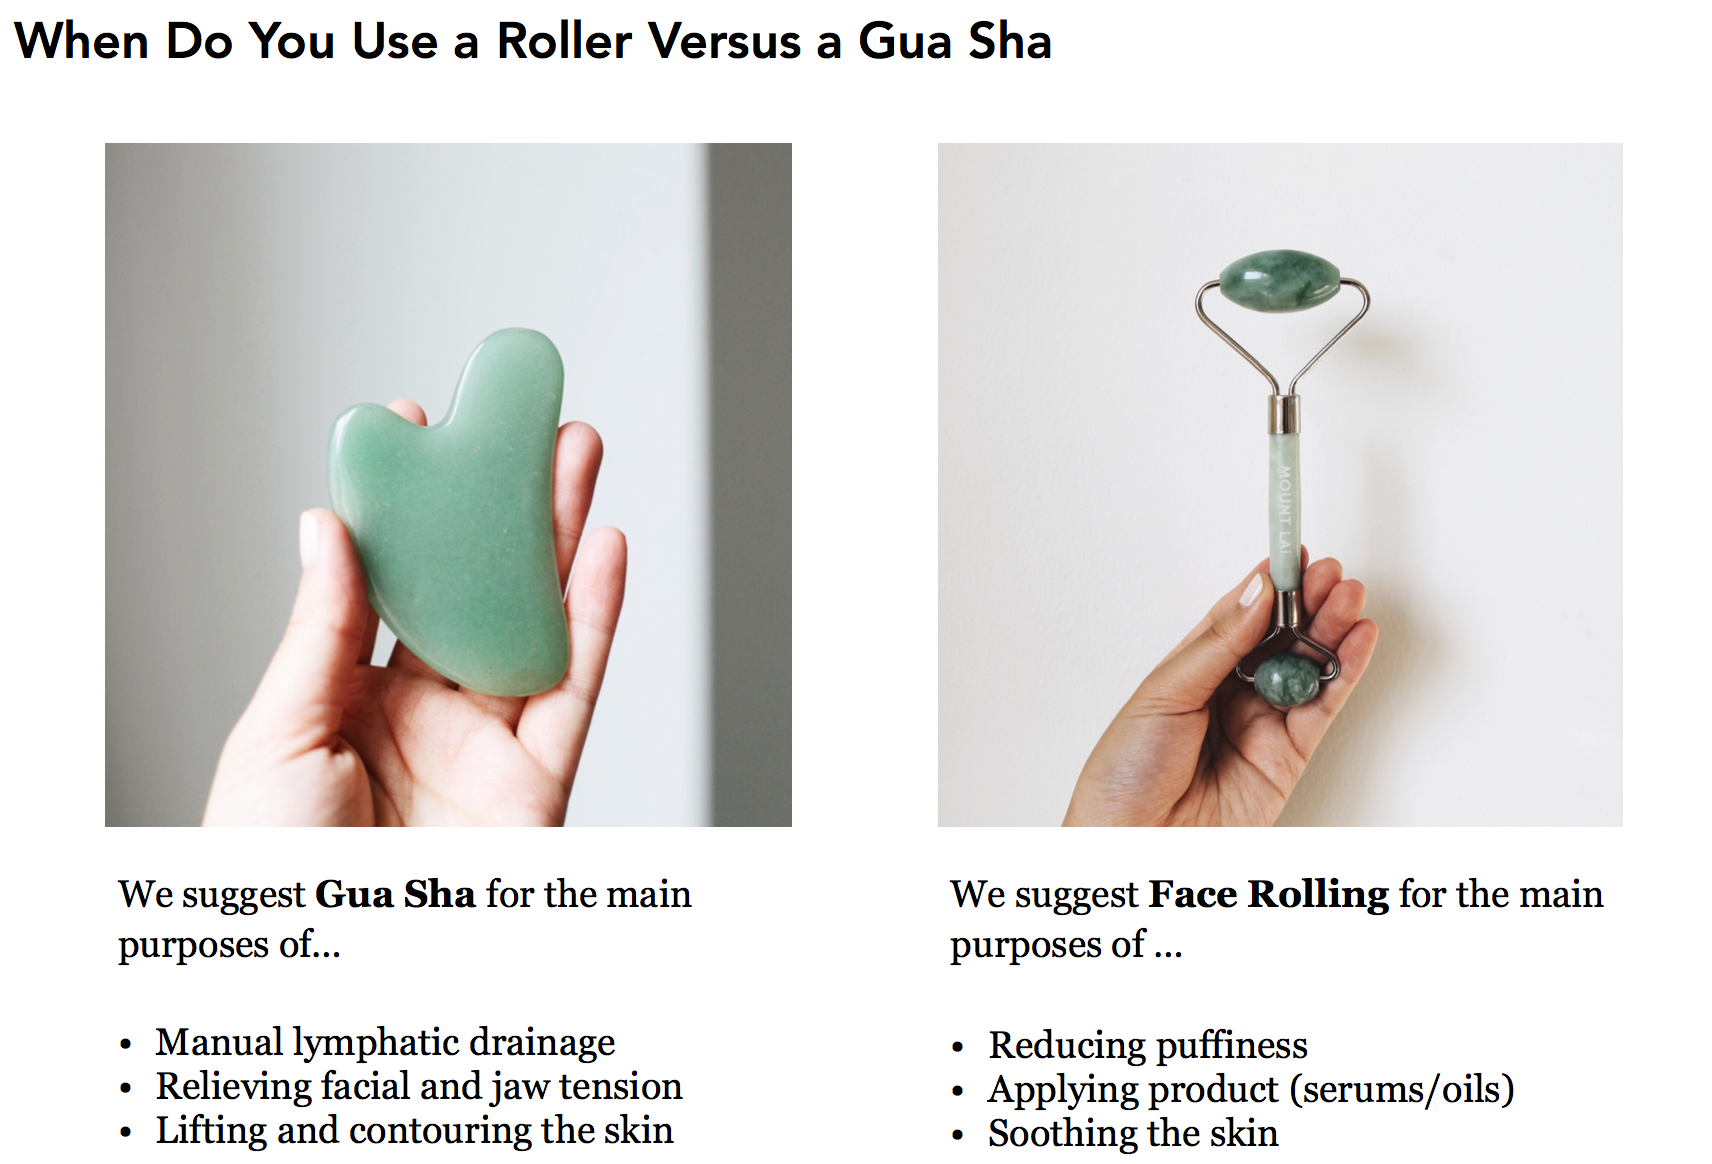 When to use jade roller versus gua sha, jade roller versus gua sha, jade roller gua sha differences